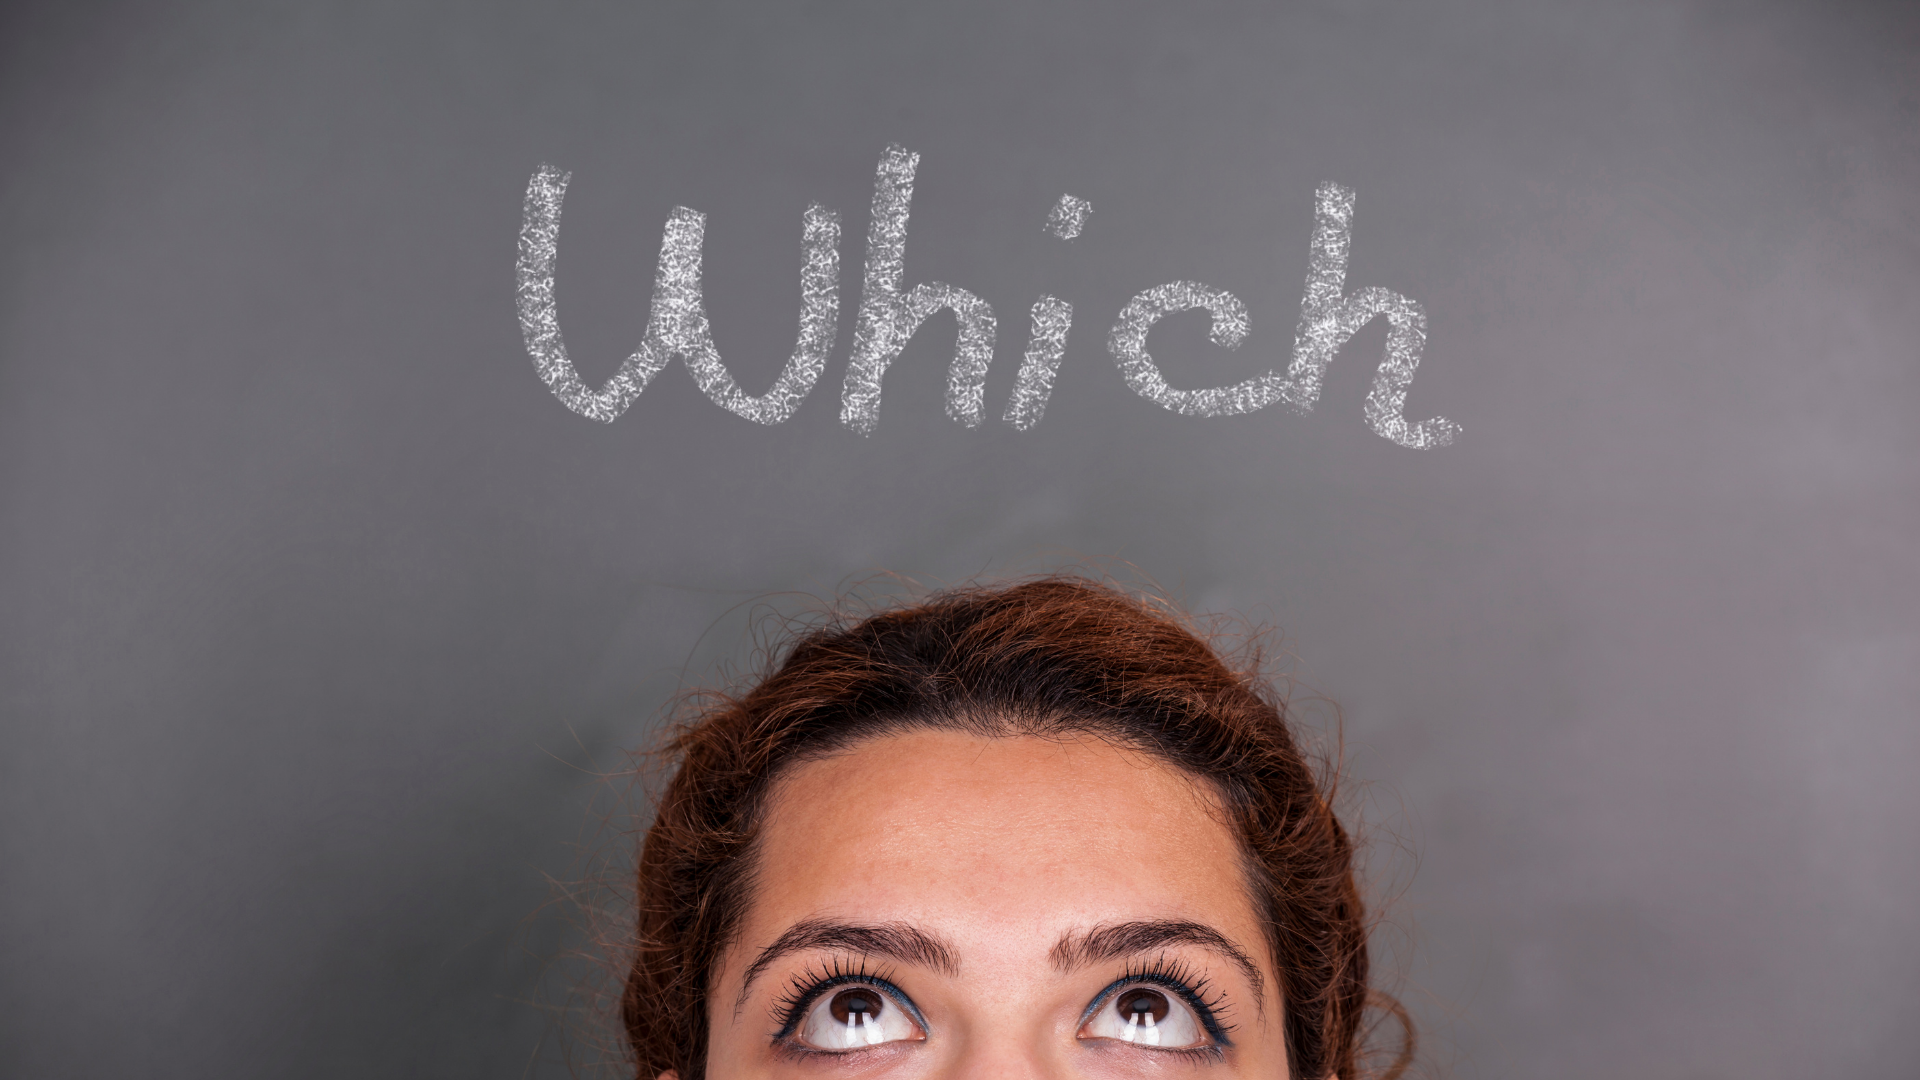 Psychiatrist vs Psychologist: Whom Should I Seek?